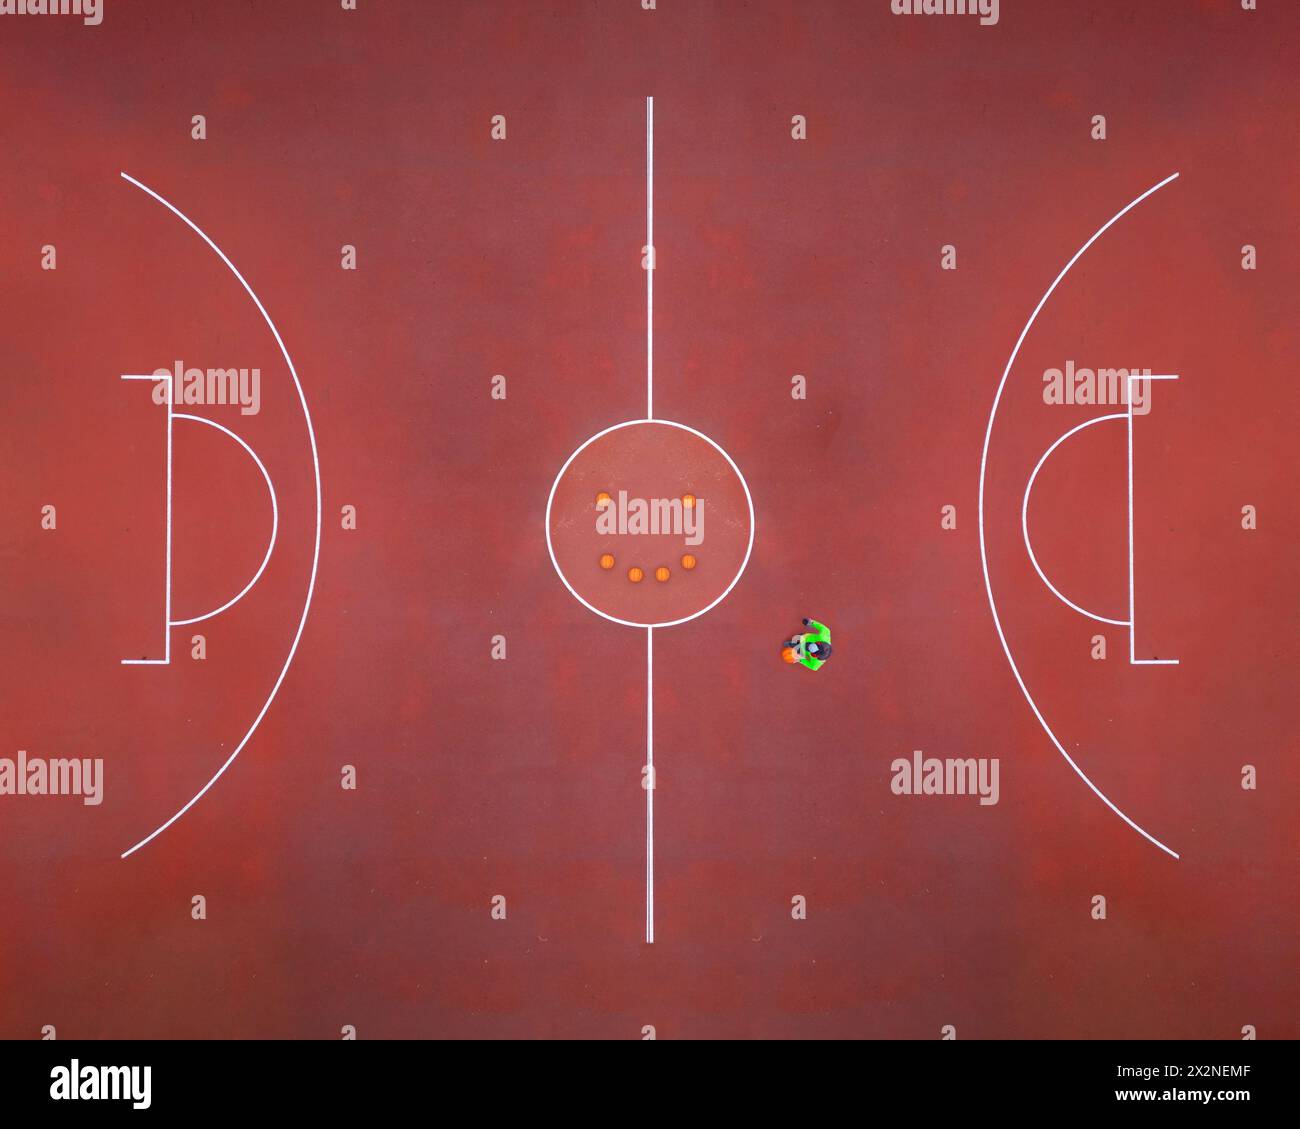 Luftaufnahme eines Basketballspielers. Fairplay-Konzept. Stockfoto